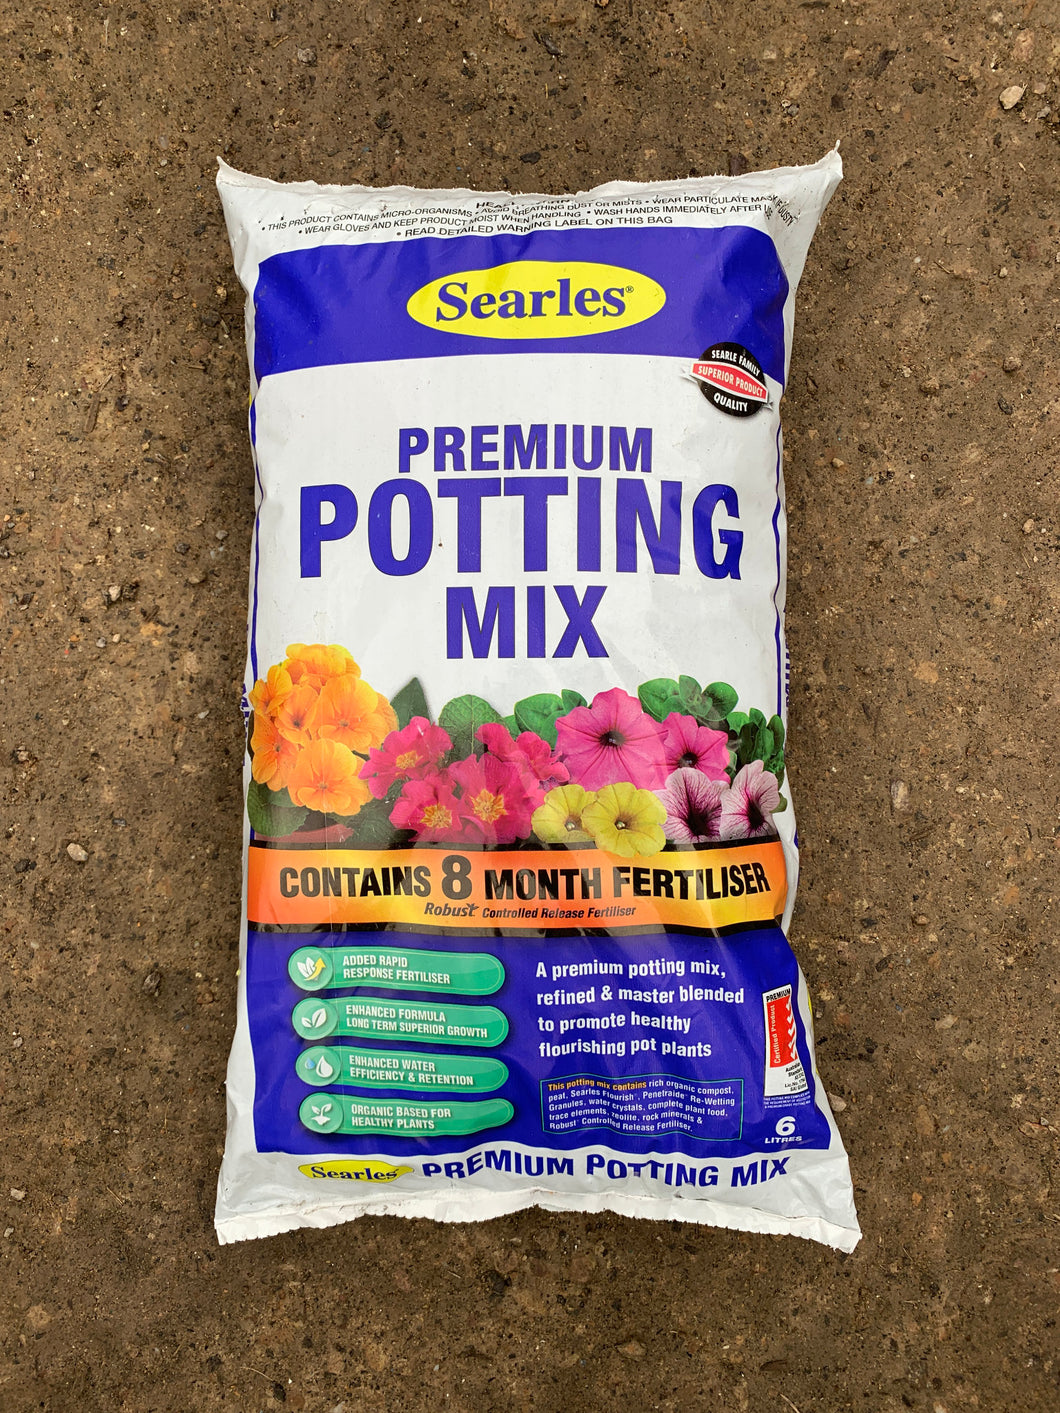 Premium Potting Mix with Penetraide & Robust